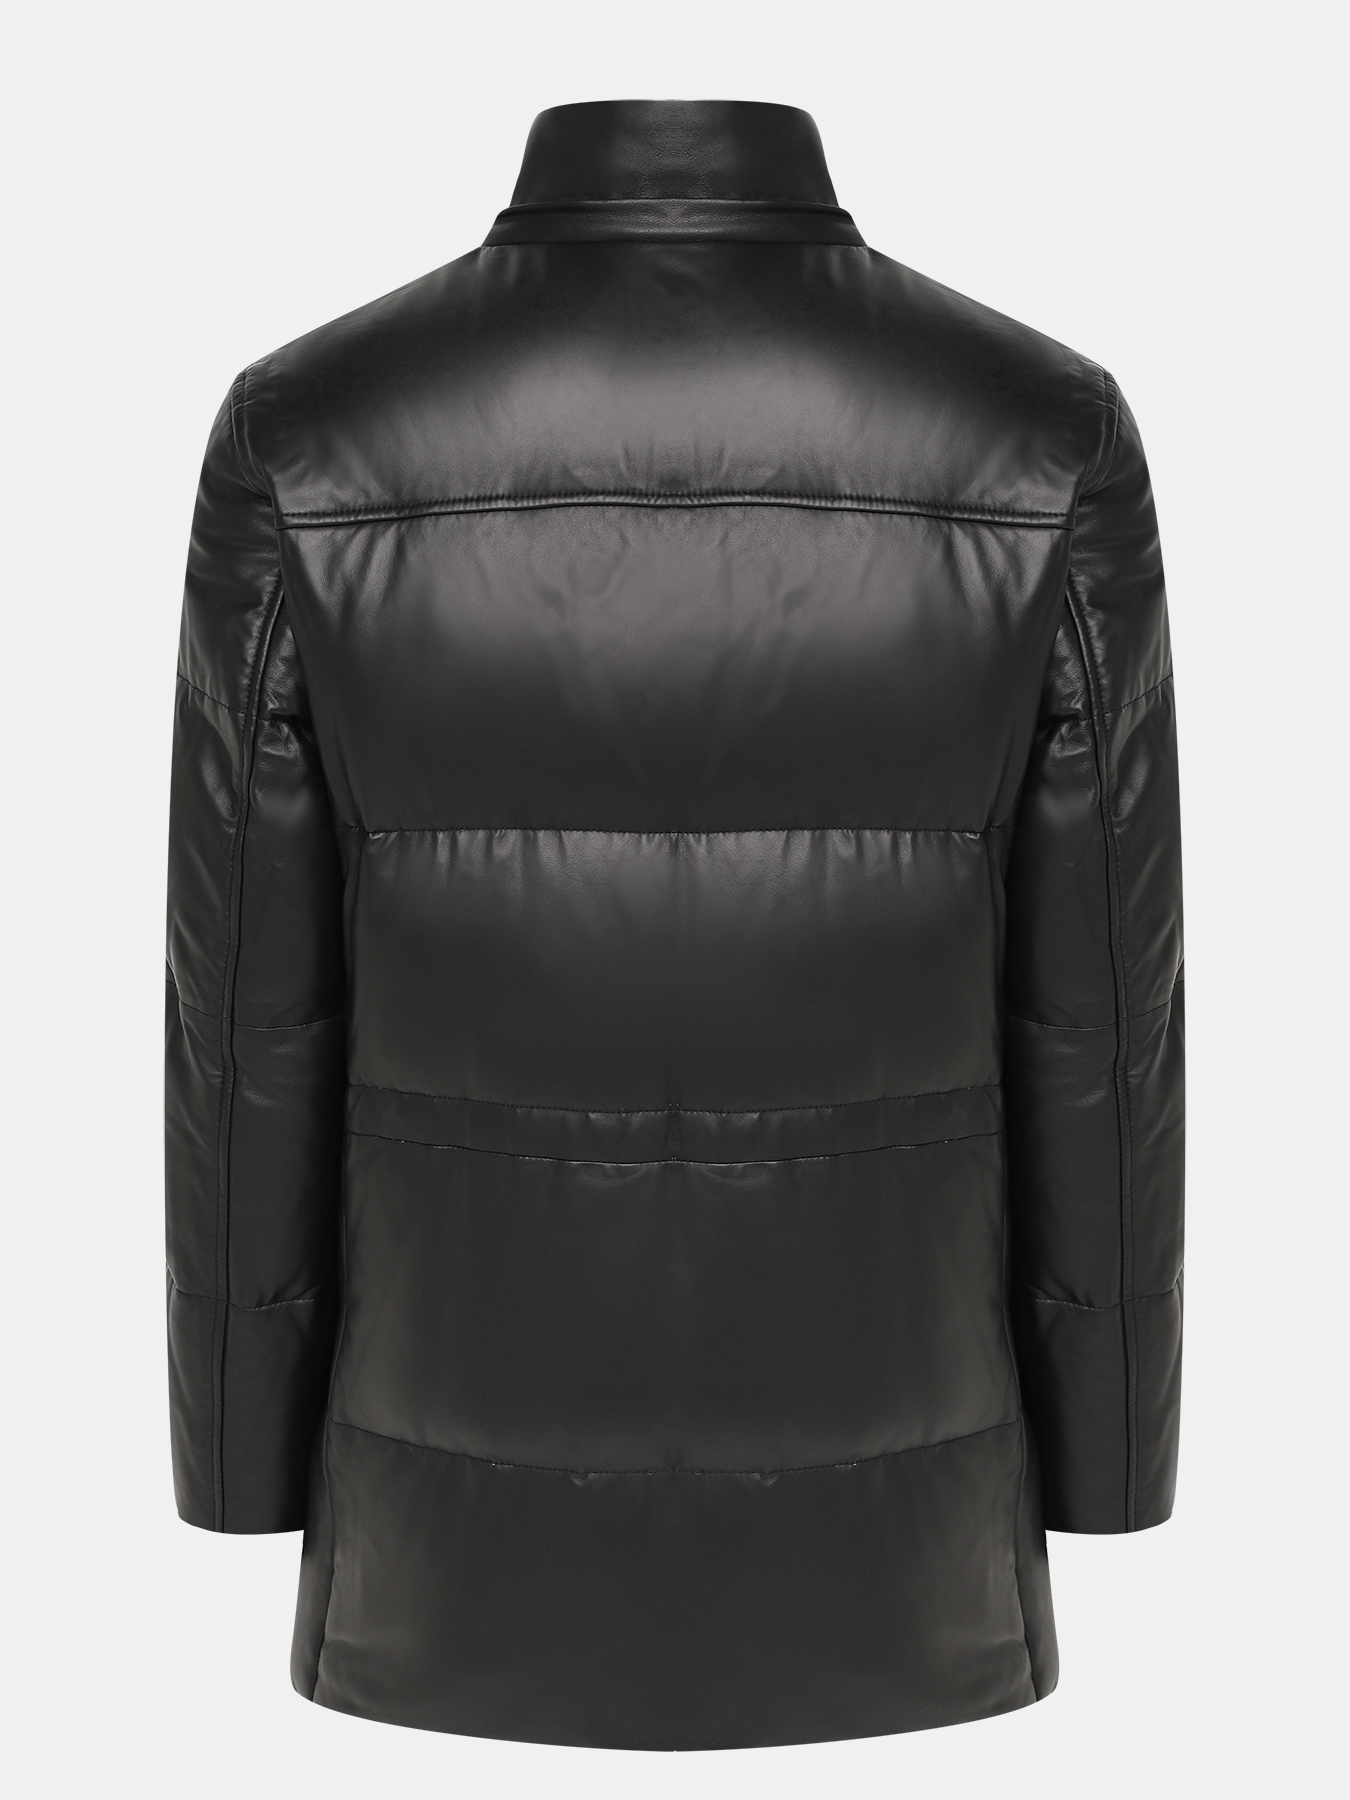 Кожаная куртка Ritter 390990-032, цвет черный, размер 62 - фото 6